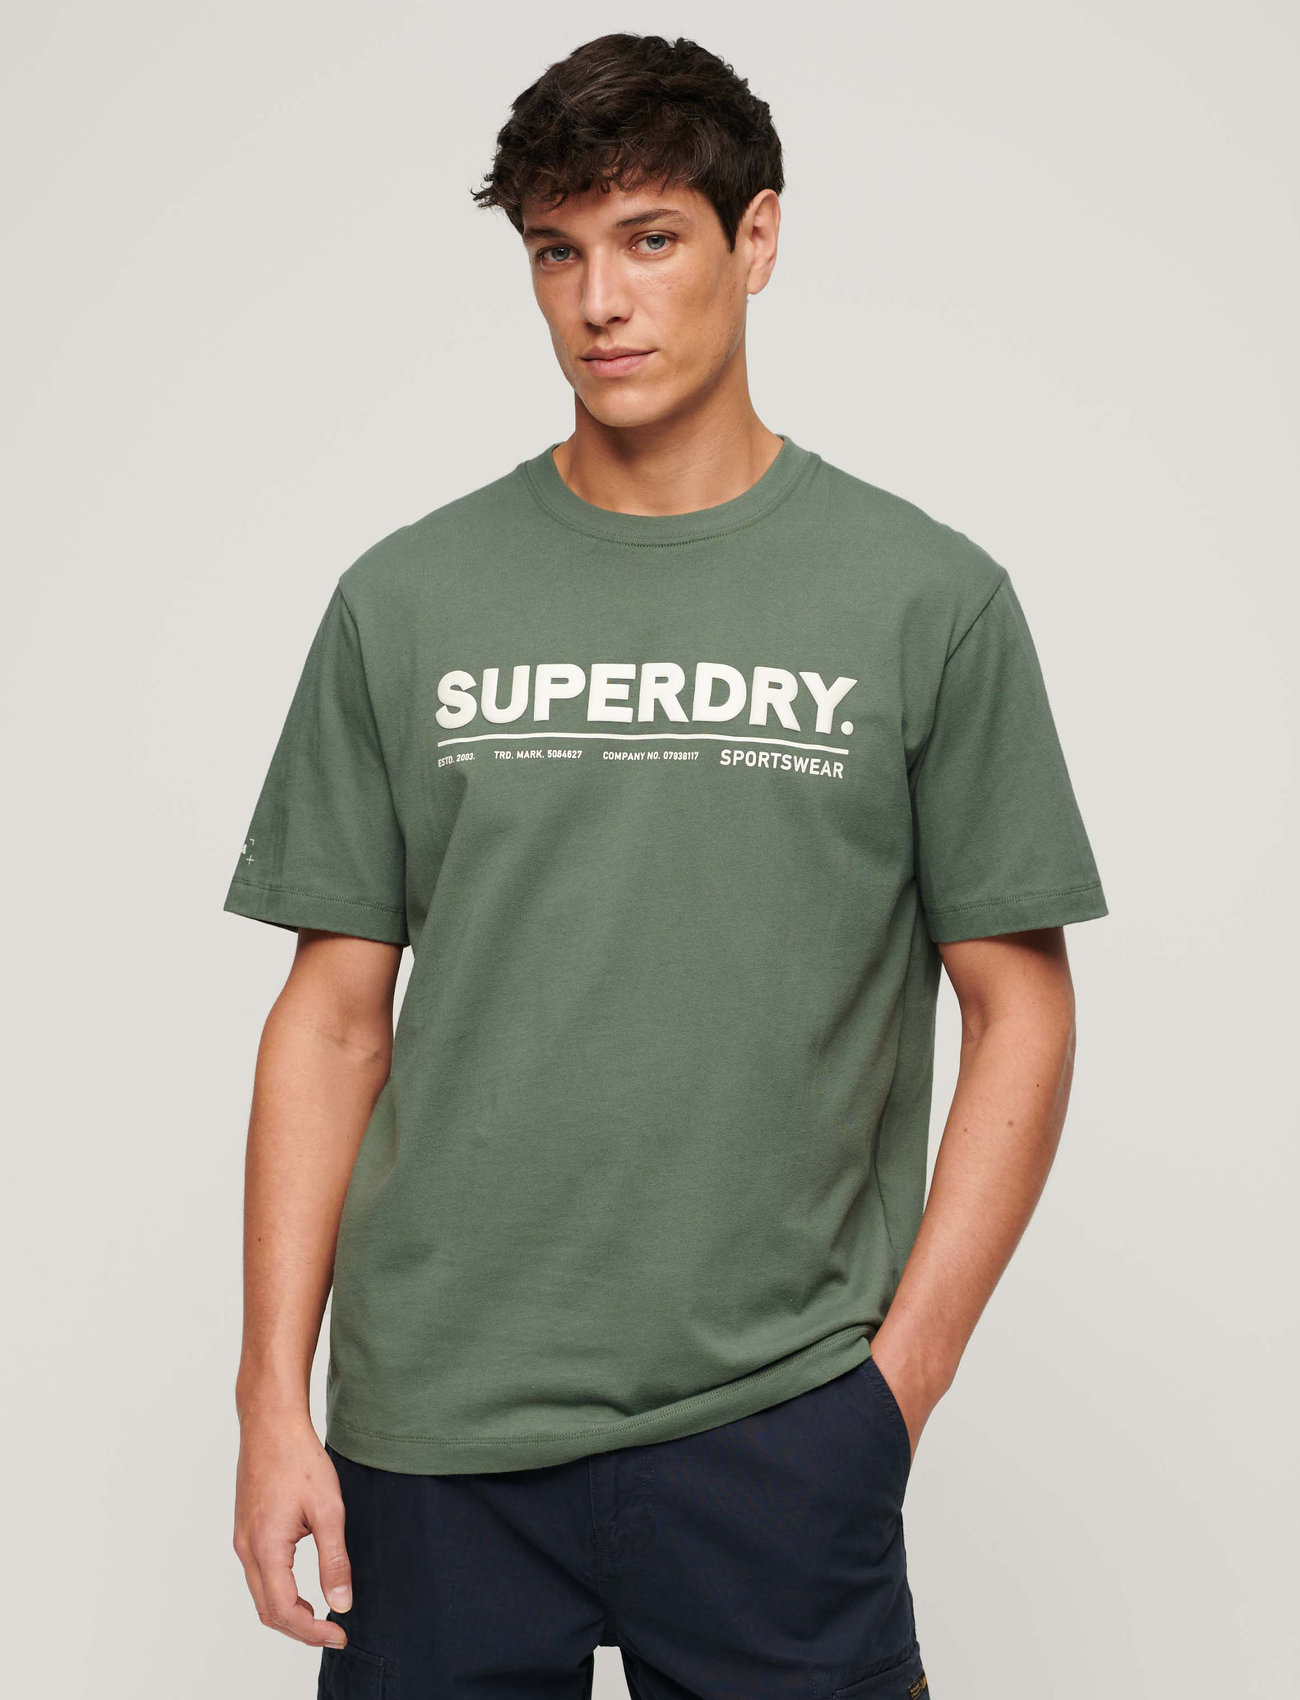 Superdry Sport - UTILITY SPORT LOGO LOOSE TEE - t-shirts - laurel khaki - 1